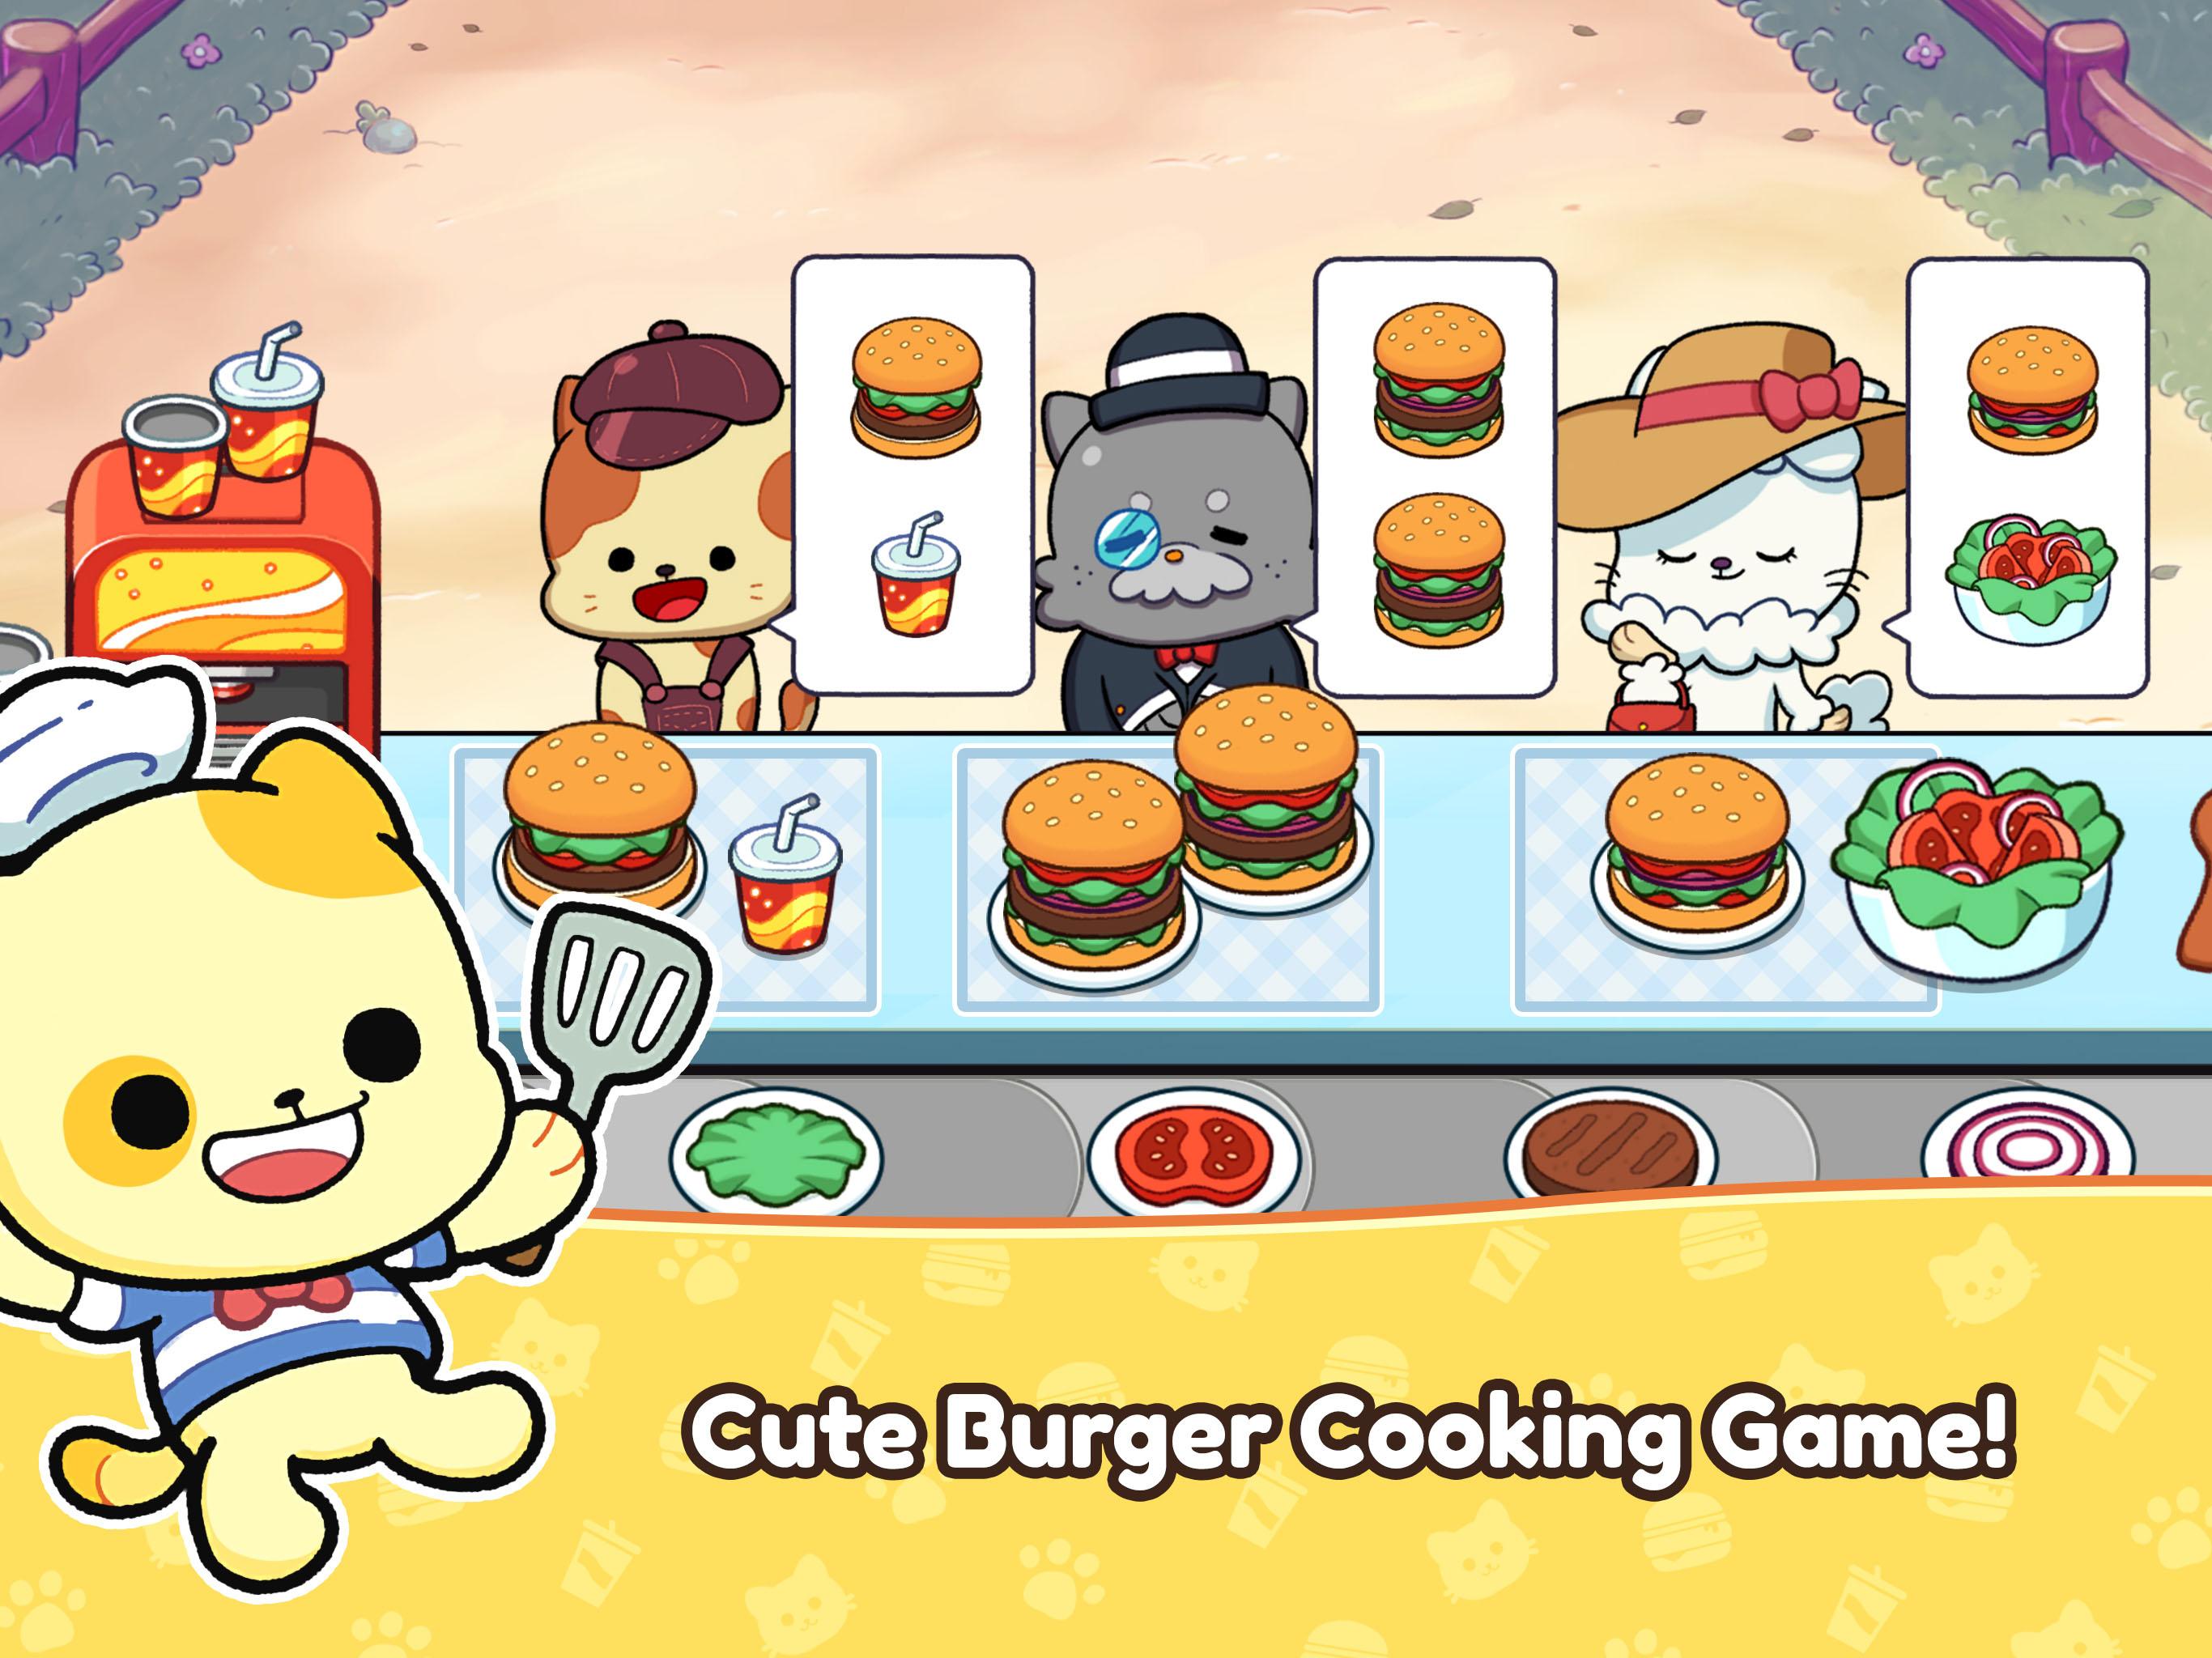 Игра бургер много денег. Коти бургер. Игра где котики готовят бутерброды. Кот из игры Cook Burgers.